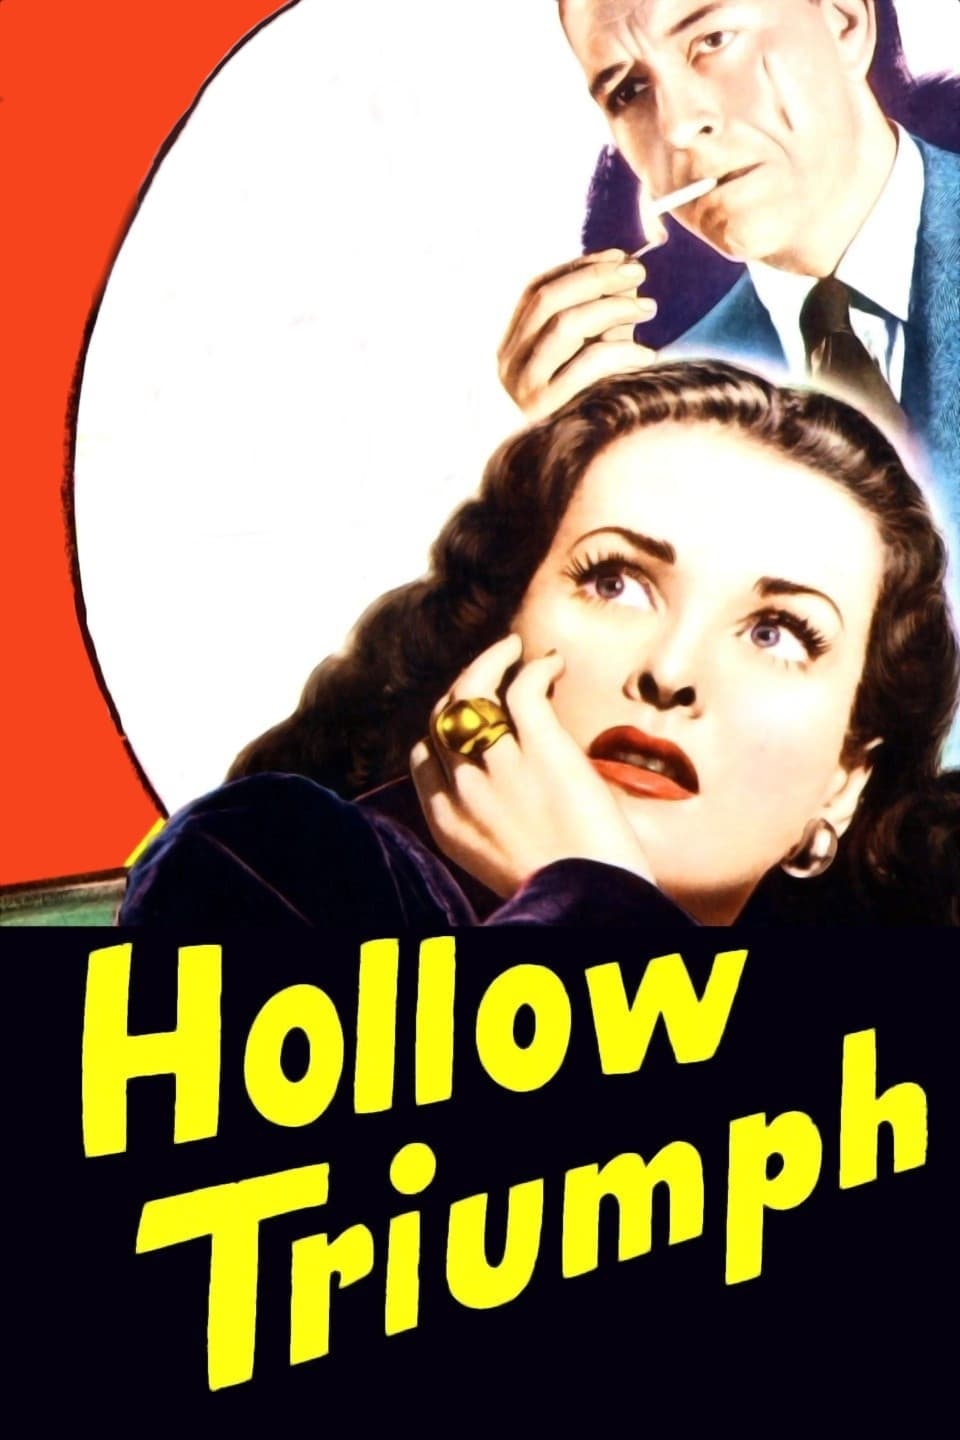 Hollow Triumph (1948)